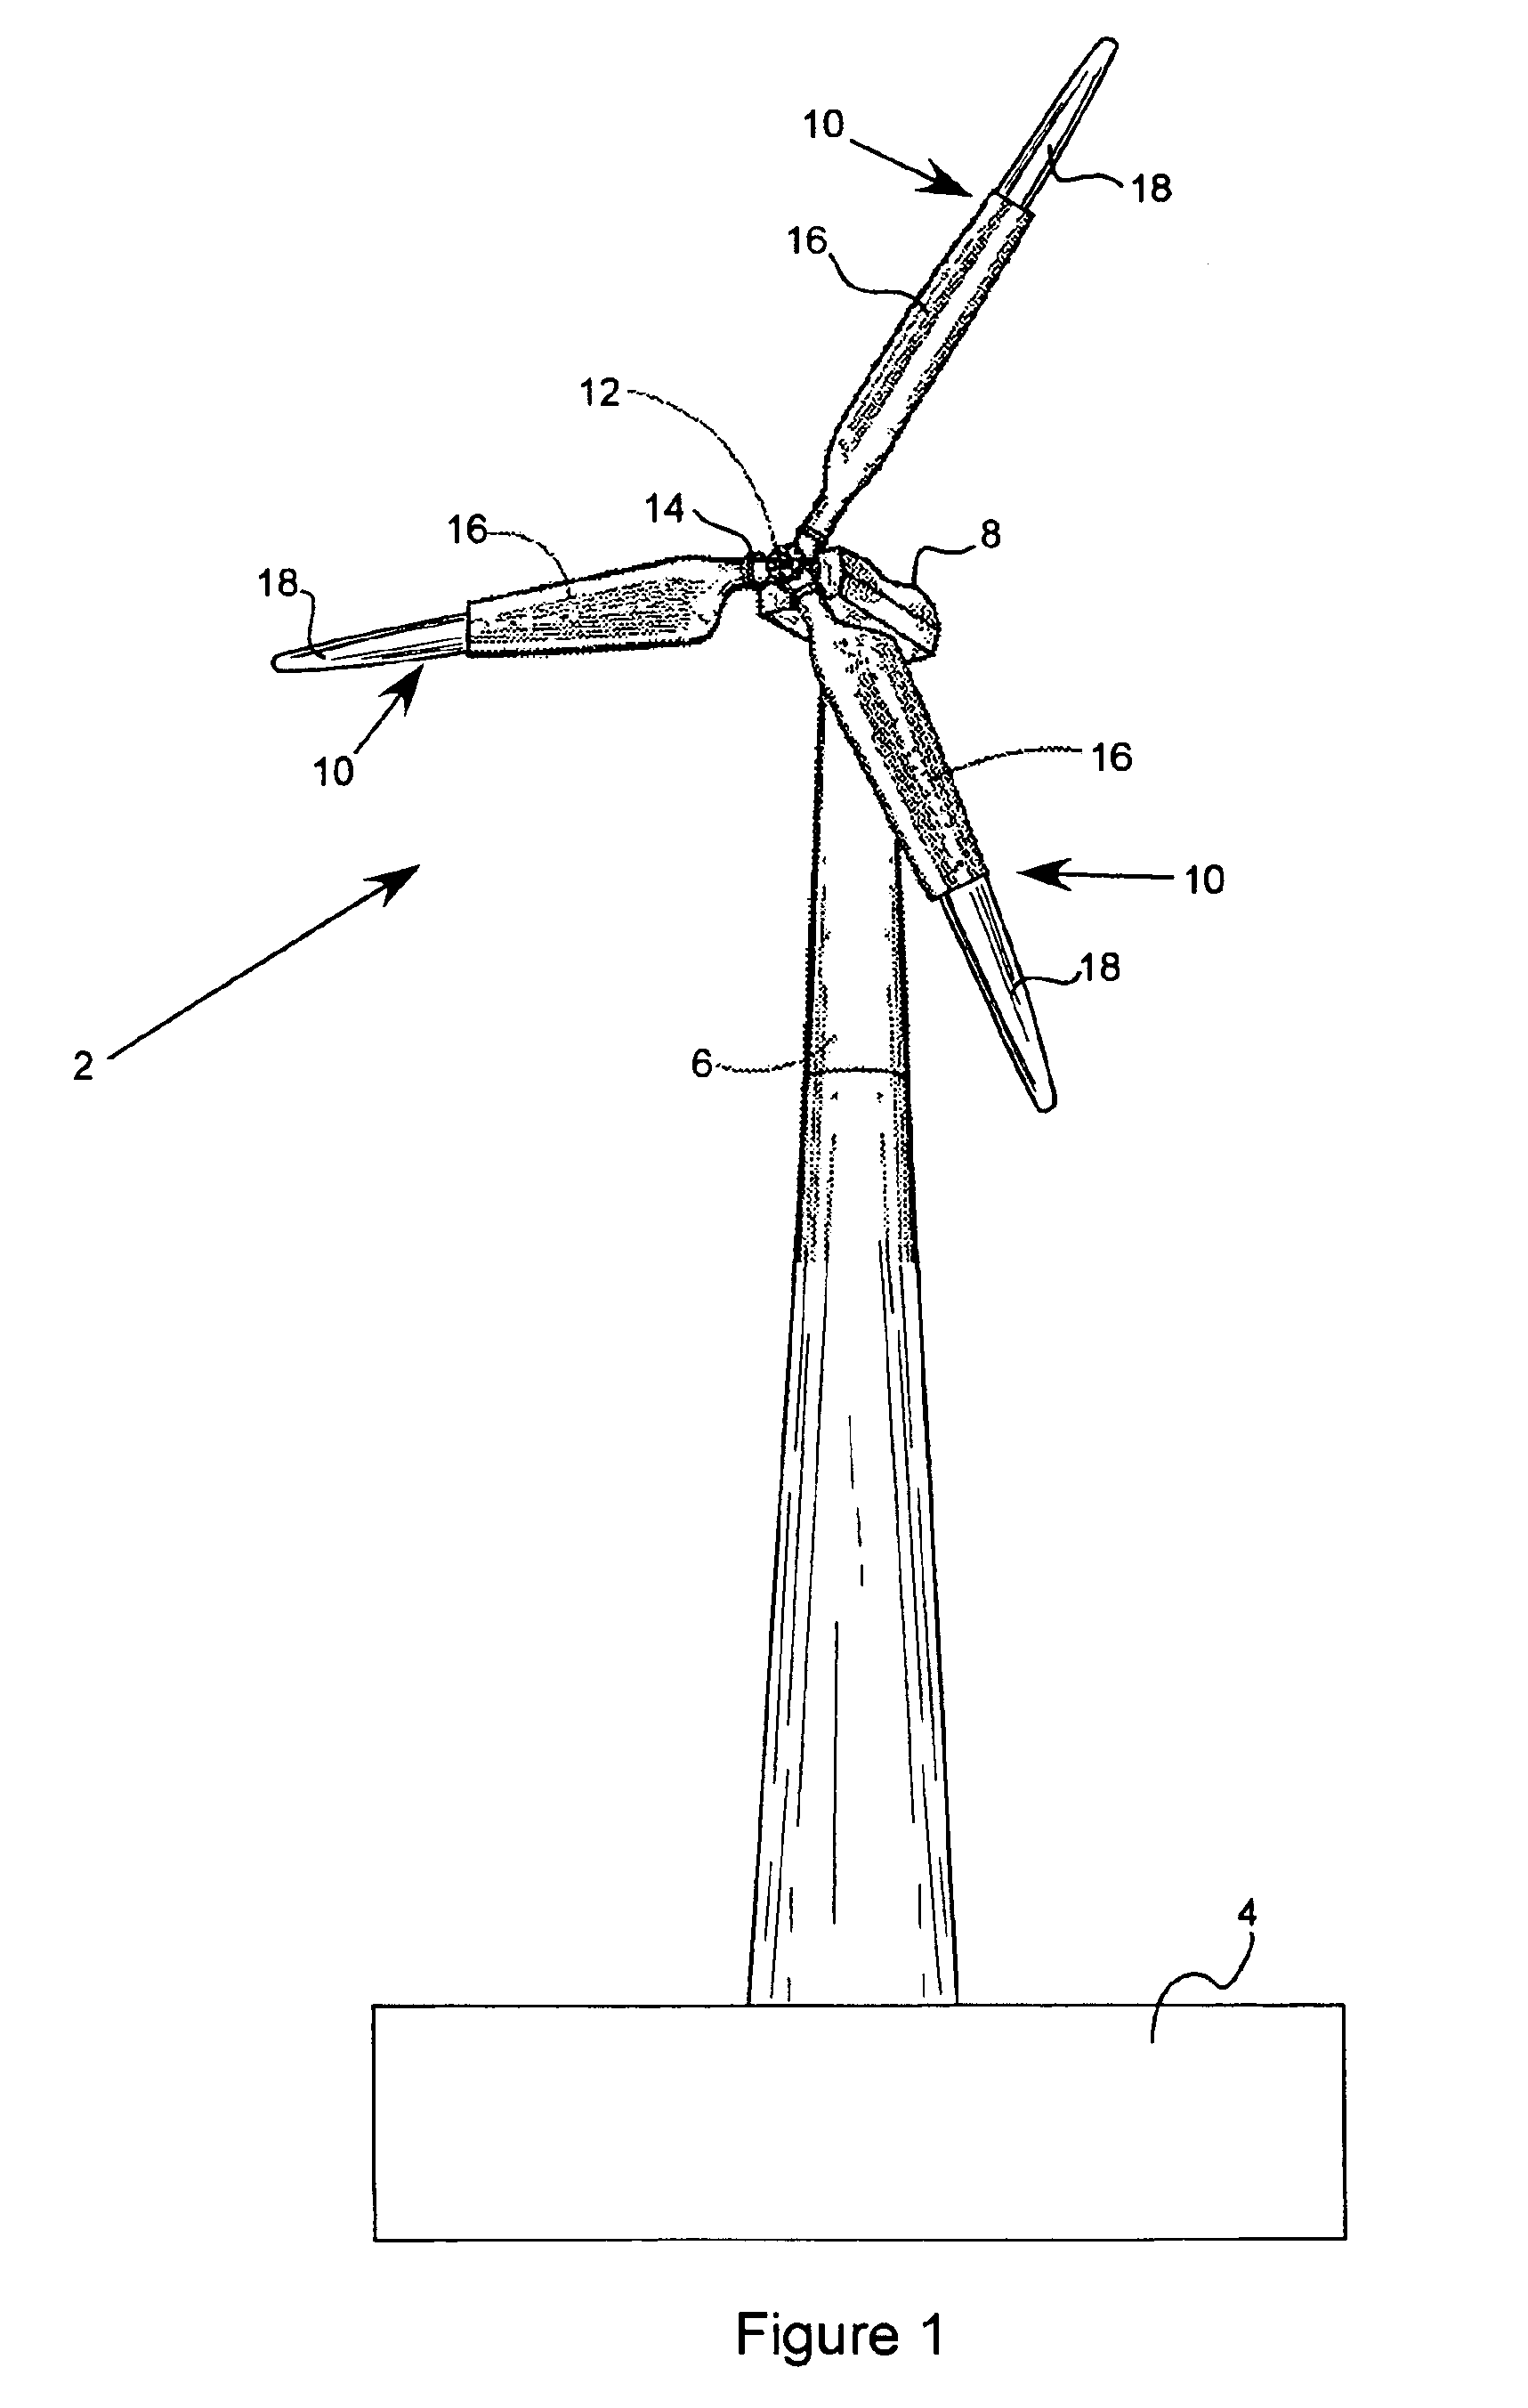 Telescoping wind turbine blade